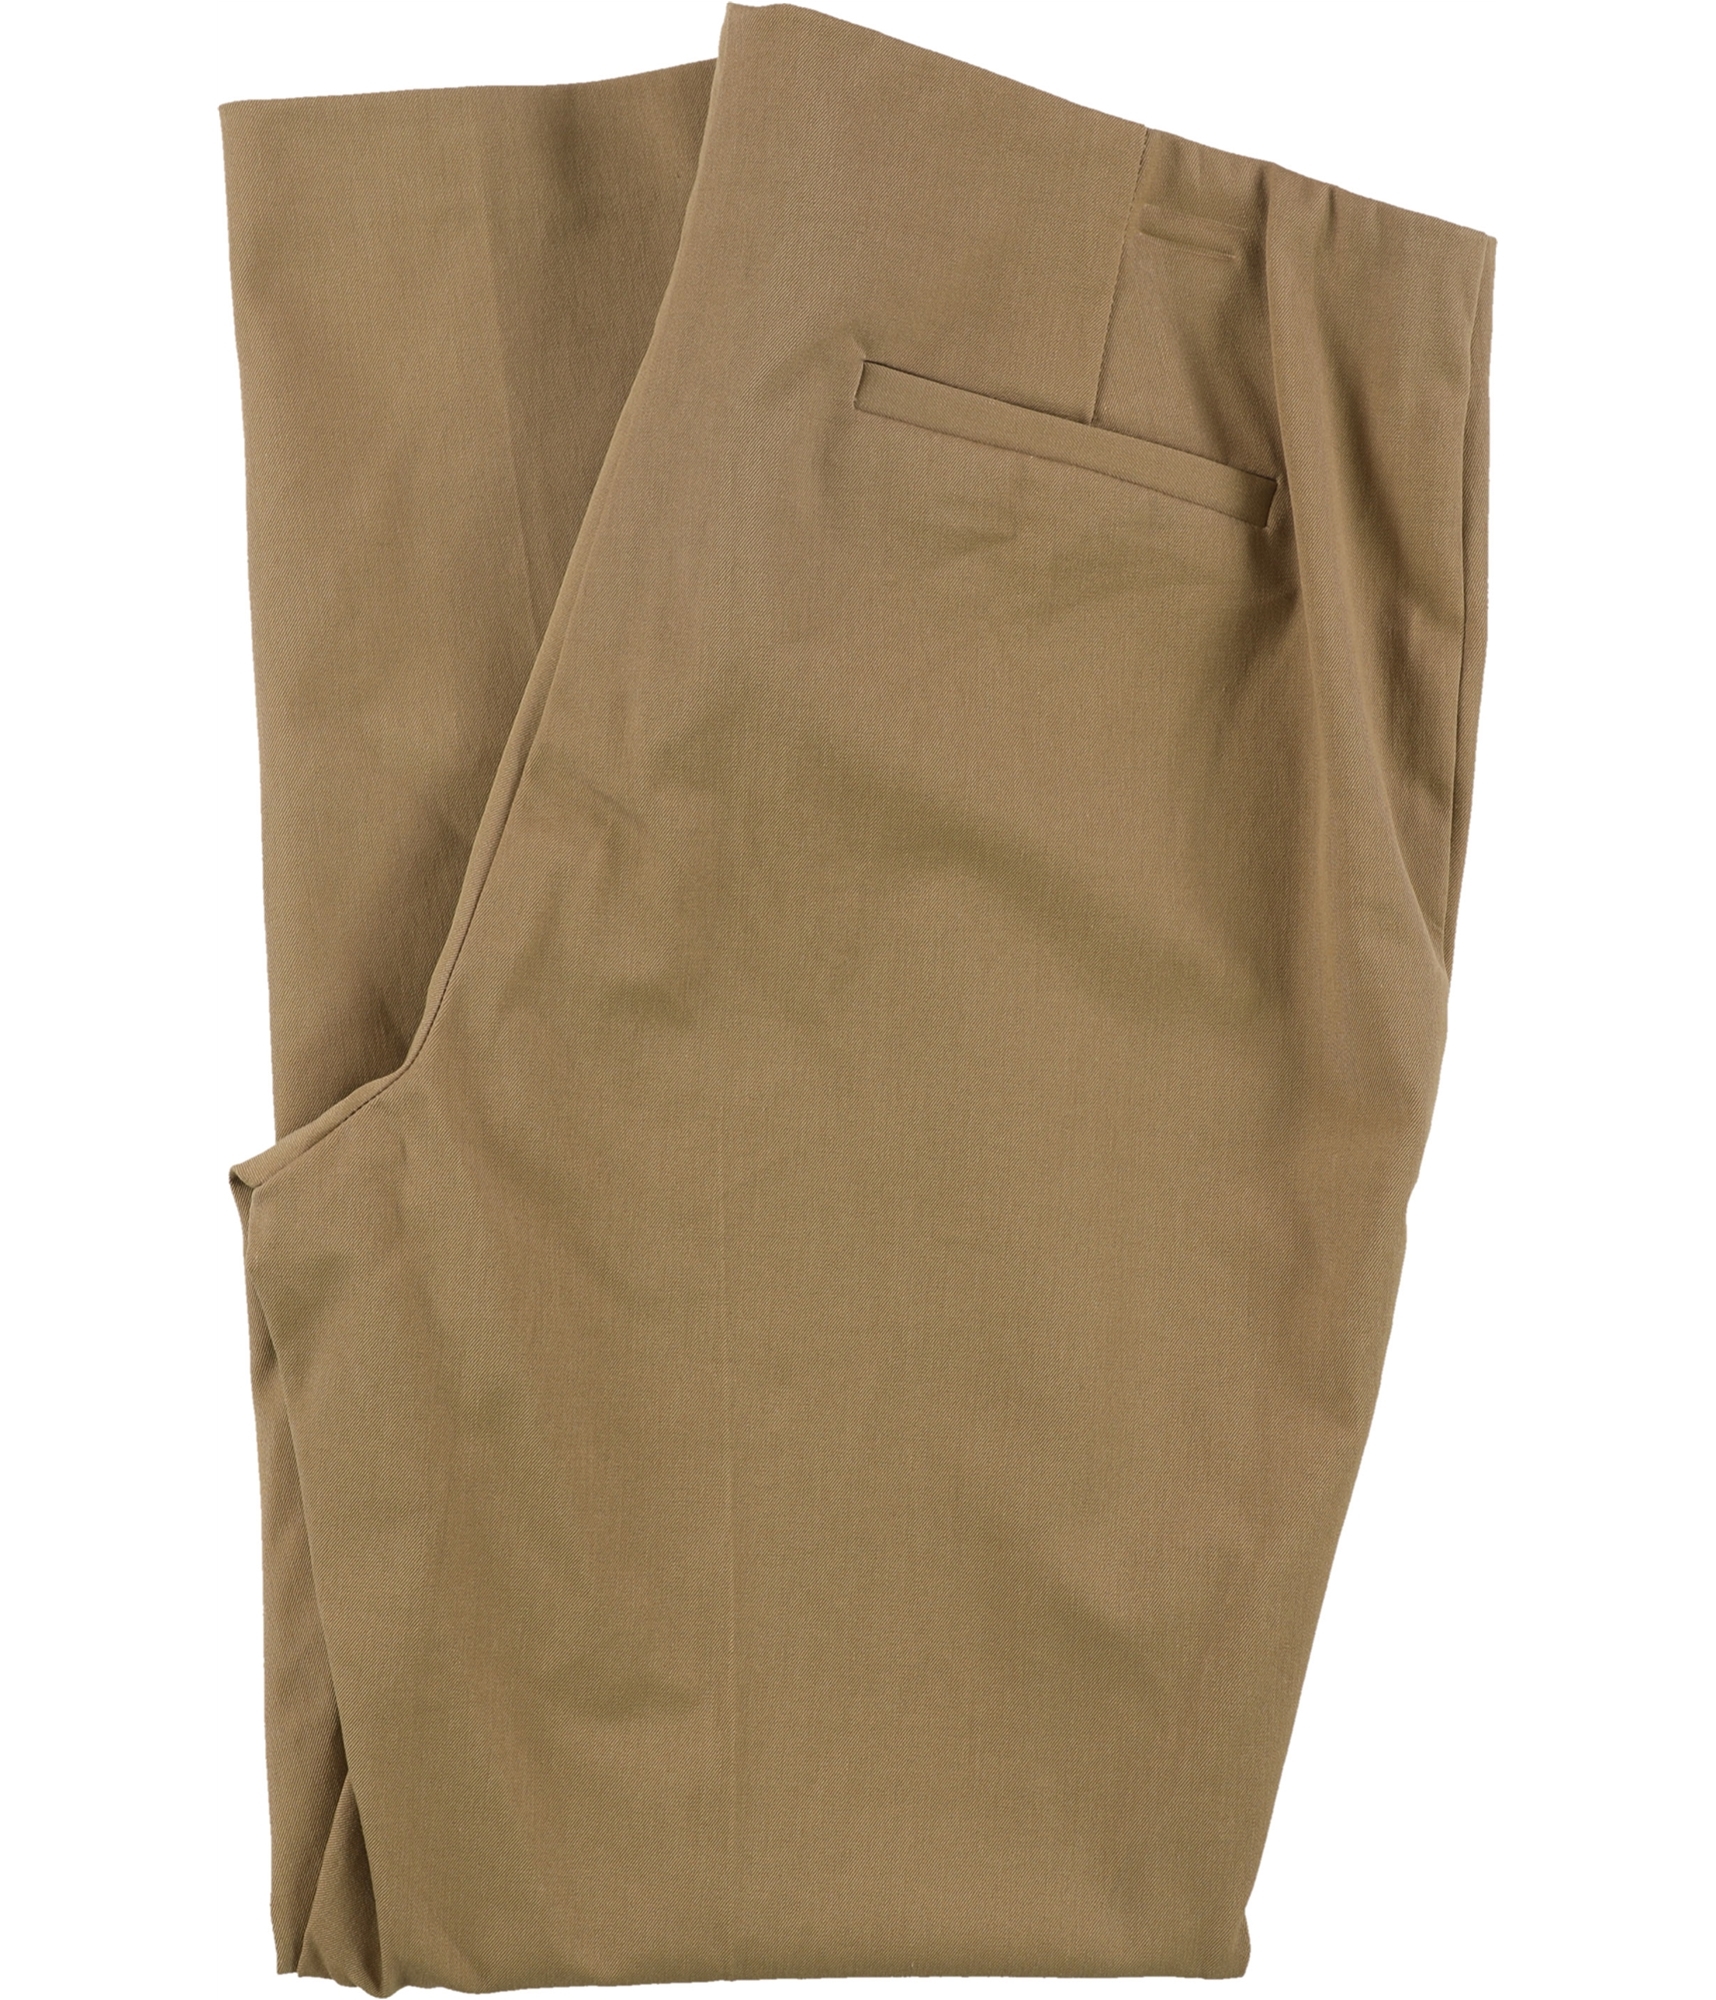 Alfani Womens Zip-Pocket Casual Trouser Pants